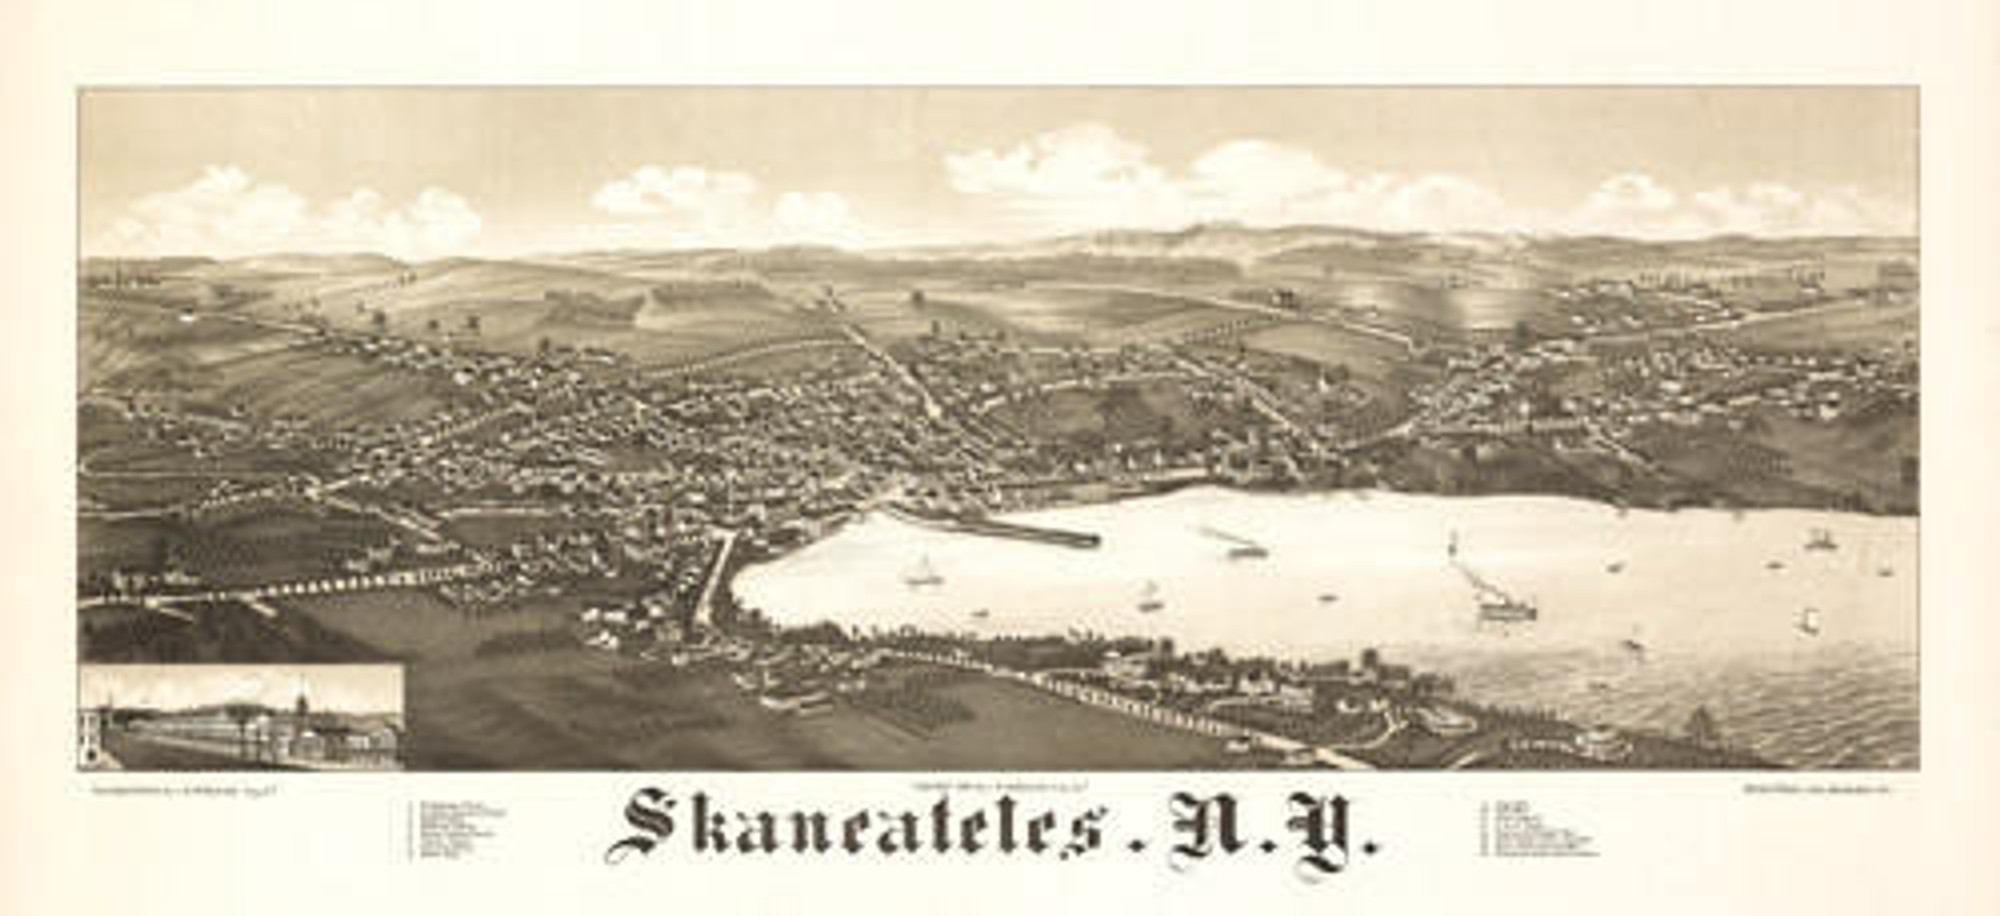 Historic Map - Skaneateles, NY - 1884, image 1, World Maps Online